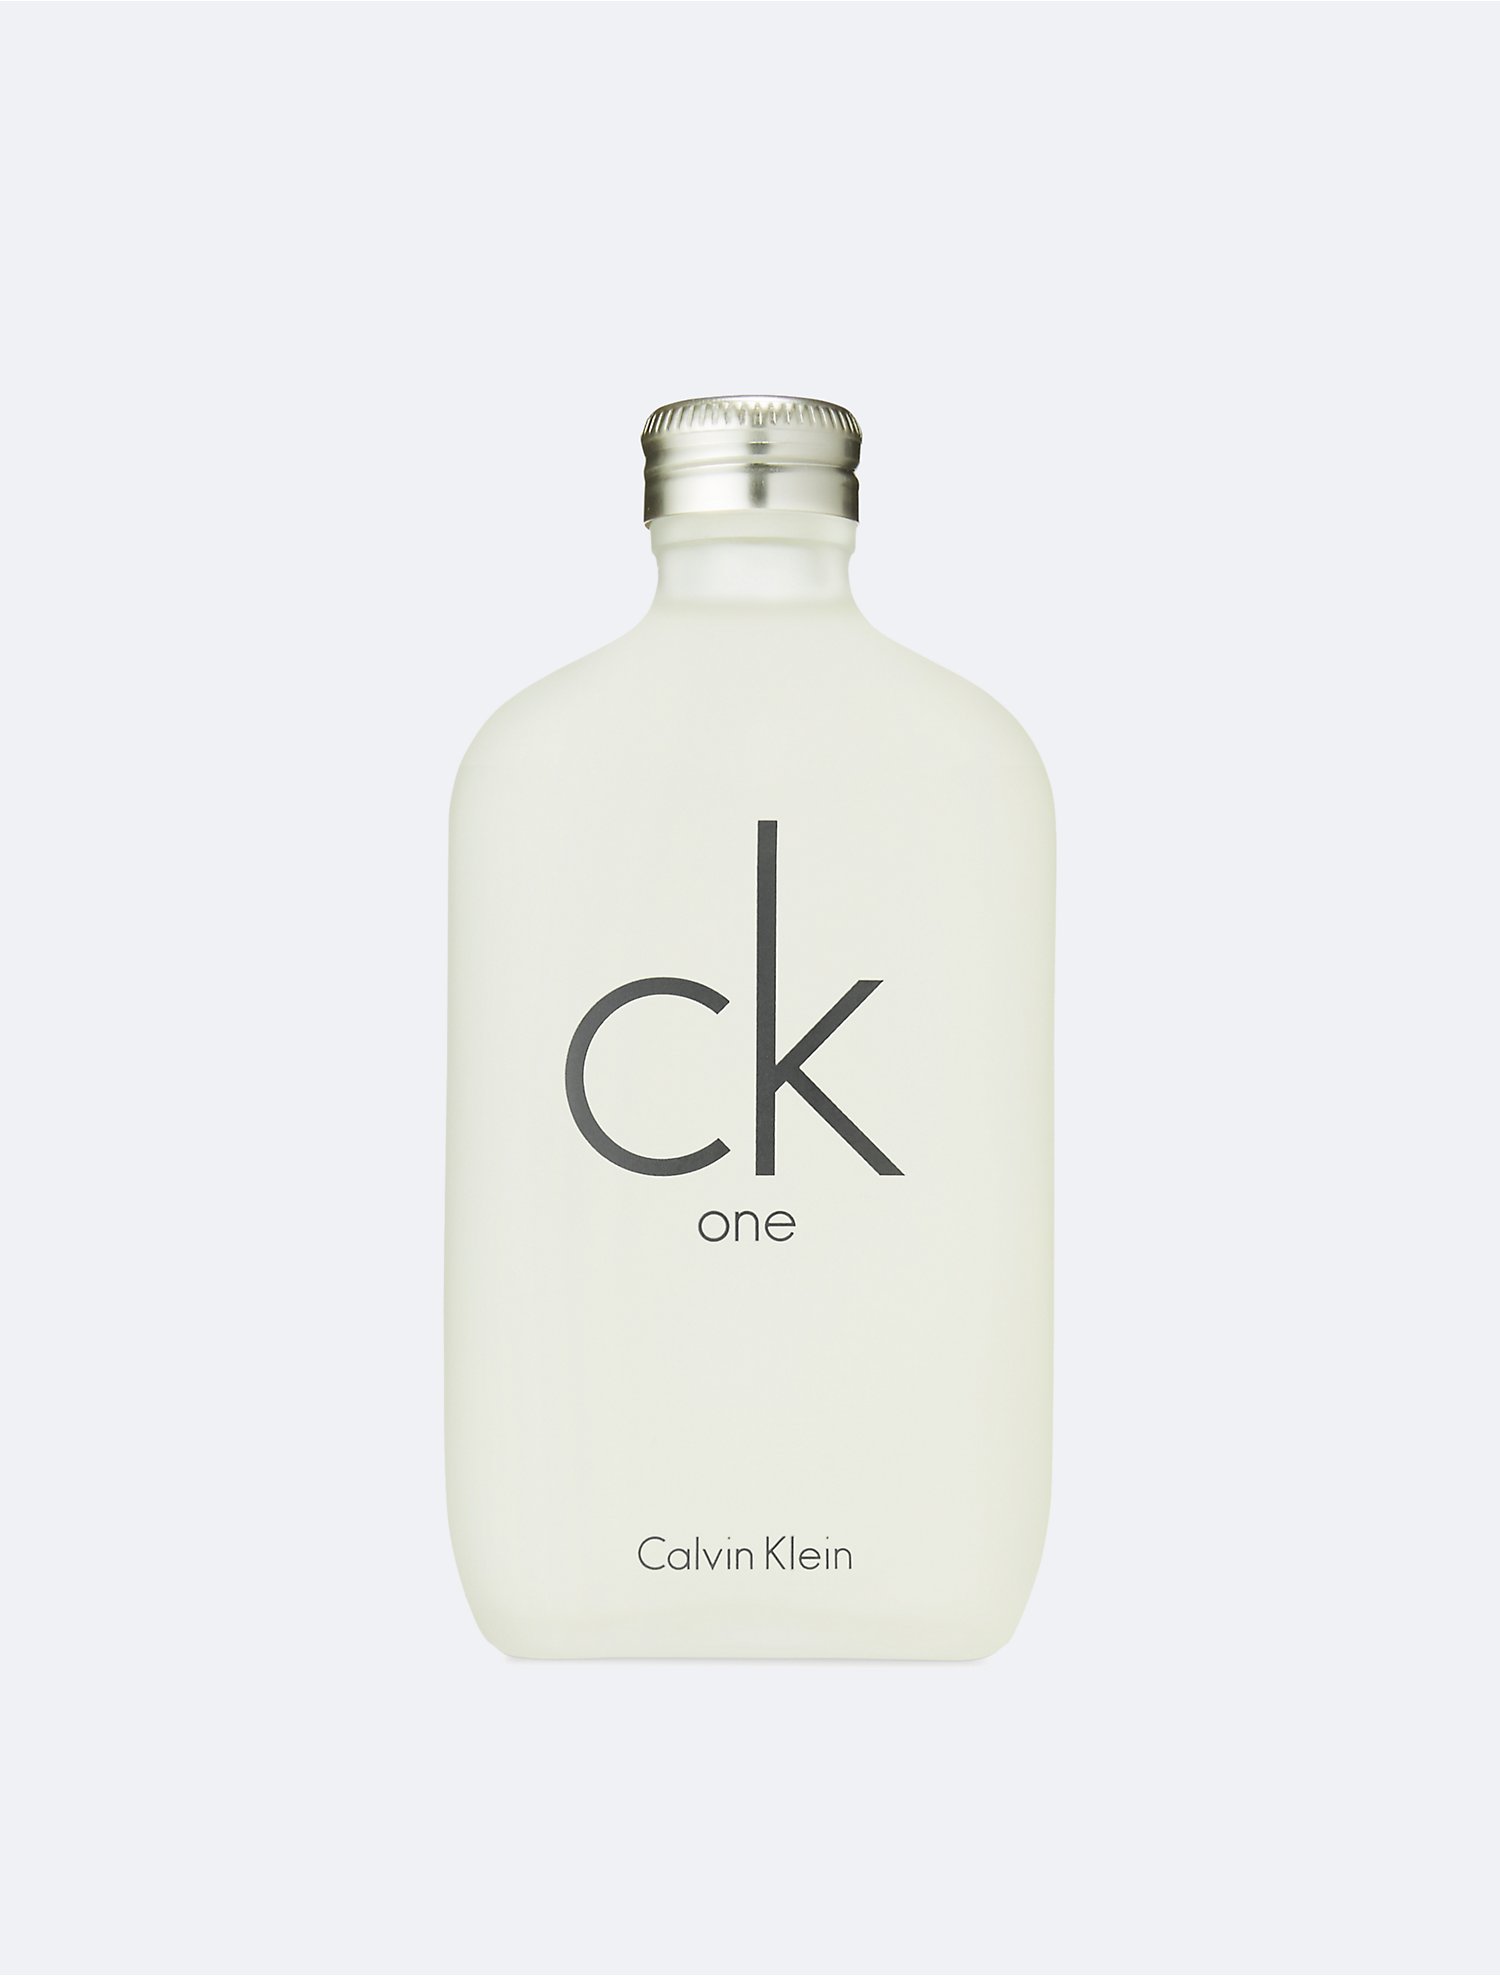 Pessimist adopt lettuce CK ONE | Calvin Klein® USA